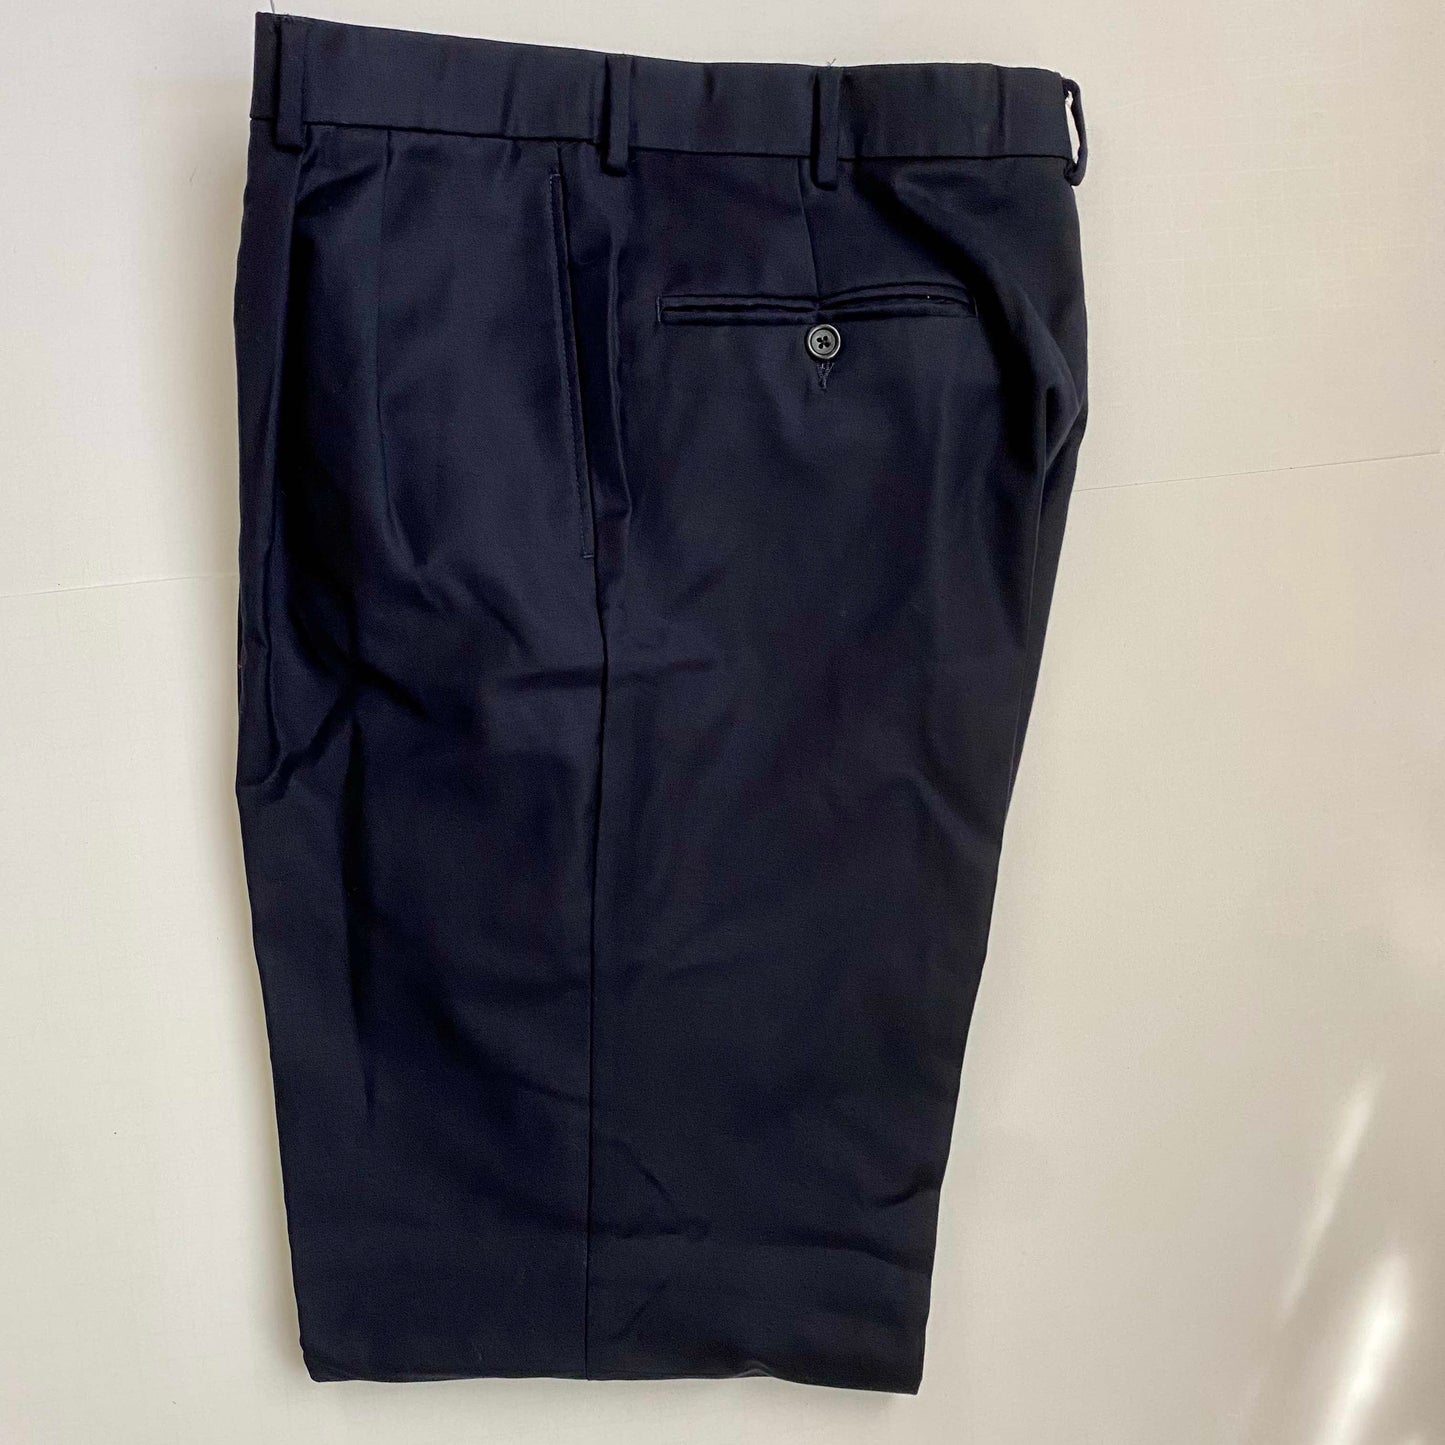 Nautica wool dress pants, 34W x 30L, Men's M